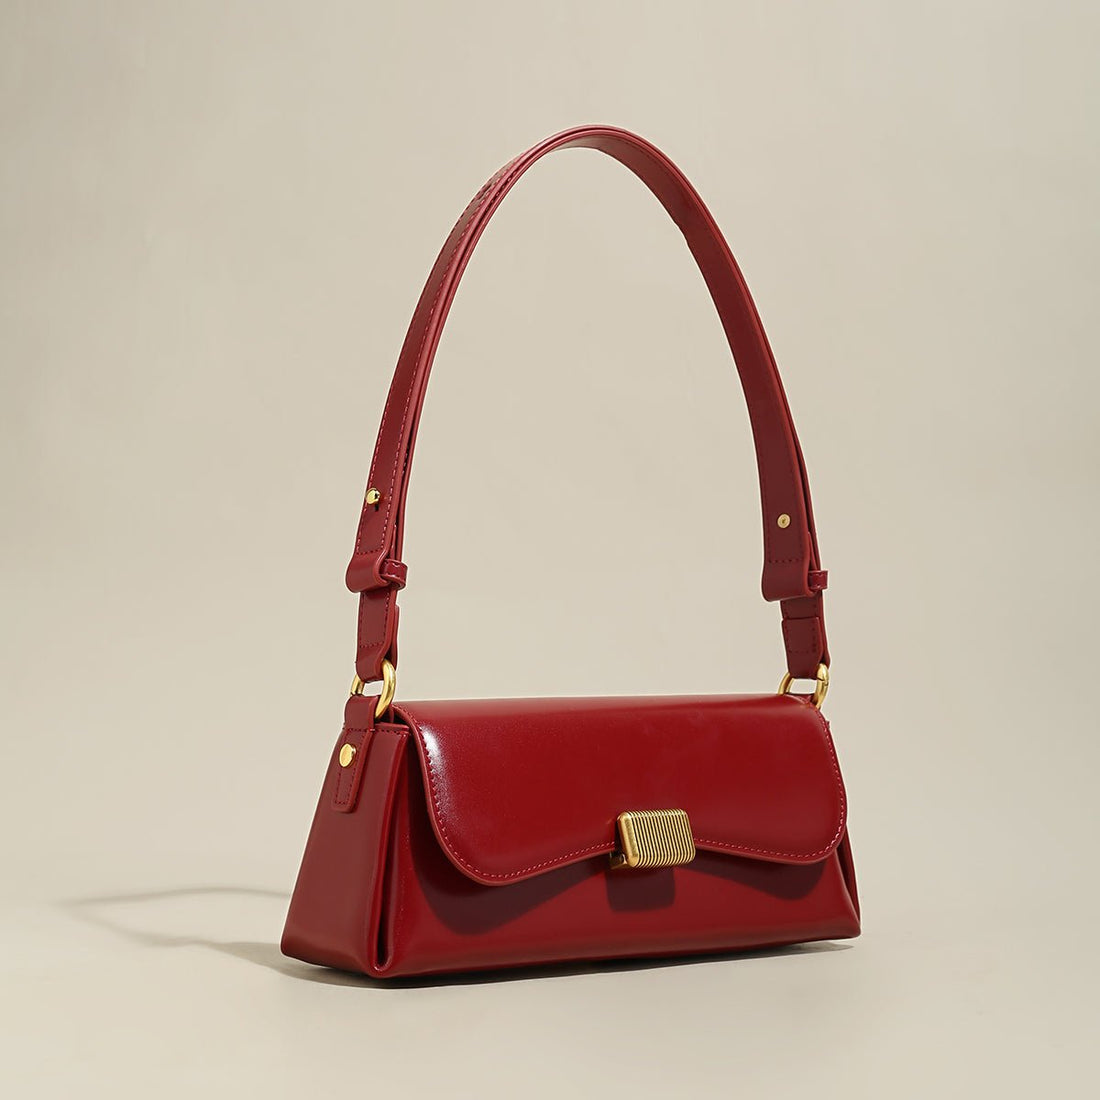 Snap By Snap Red Leather Shoulder Bag - 0cm